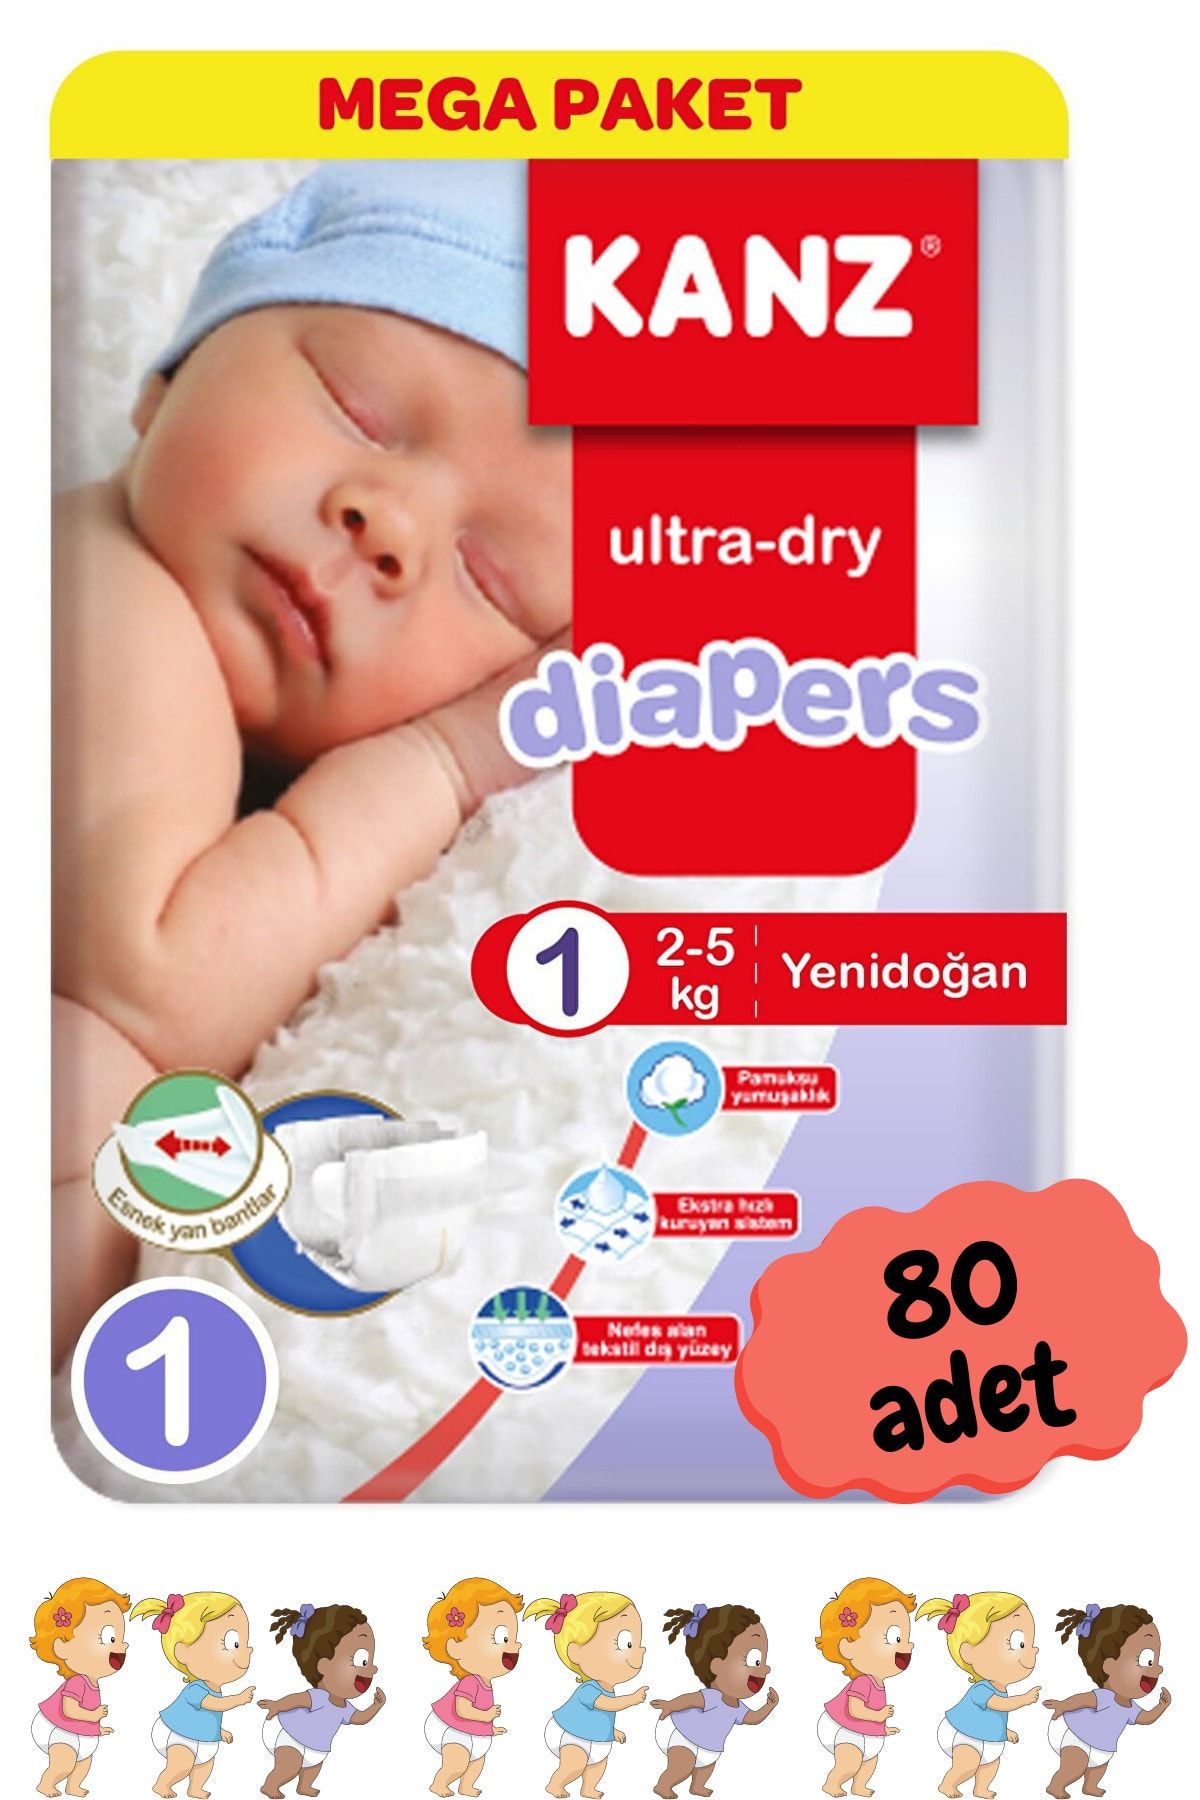 Kanz Bebek Bezi Ekonomik Bebek Bezi Alman Ürünü Bebek Bezi